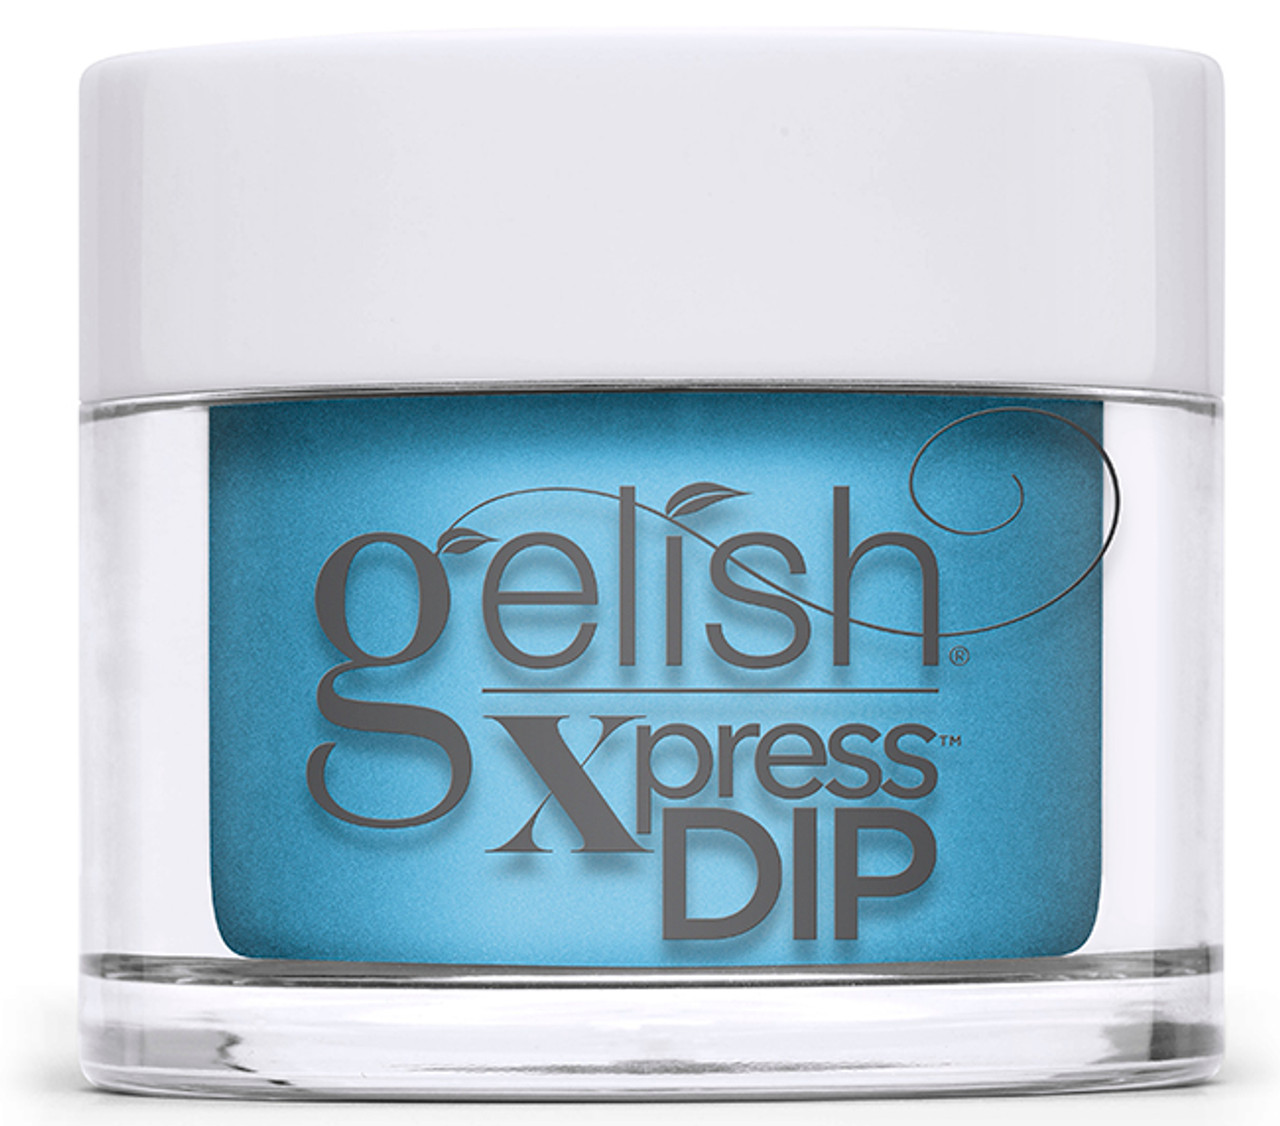 Gelish Xpress Dip No Filter Needed - 1.5 oz / 43 g